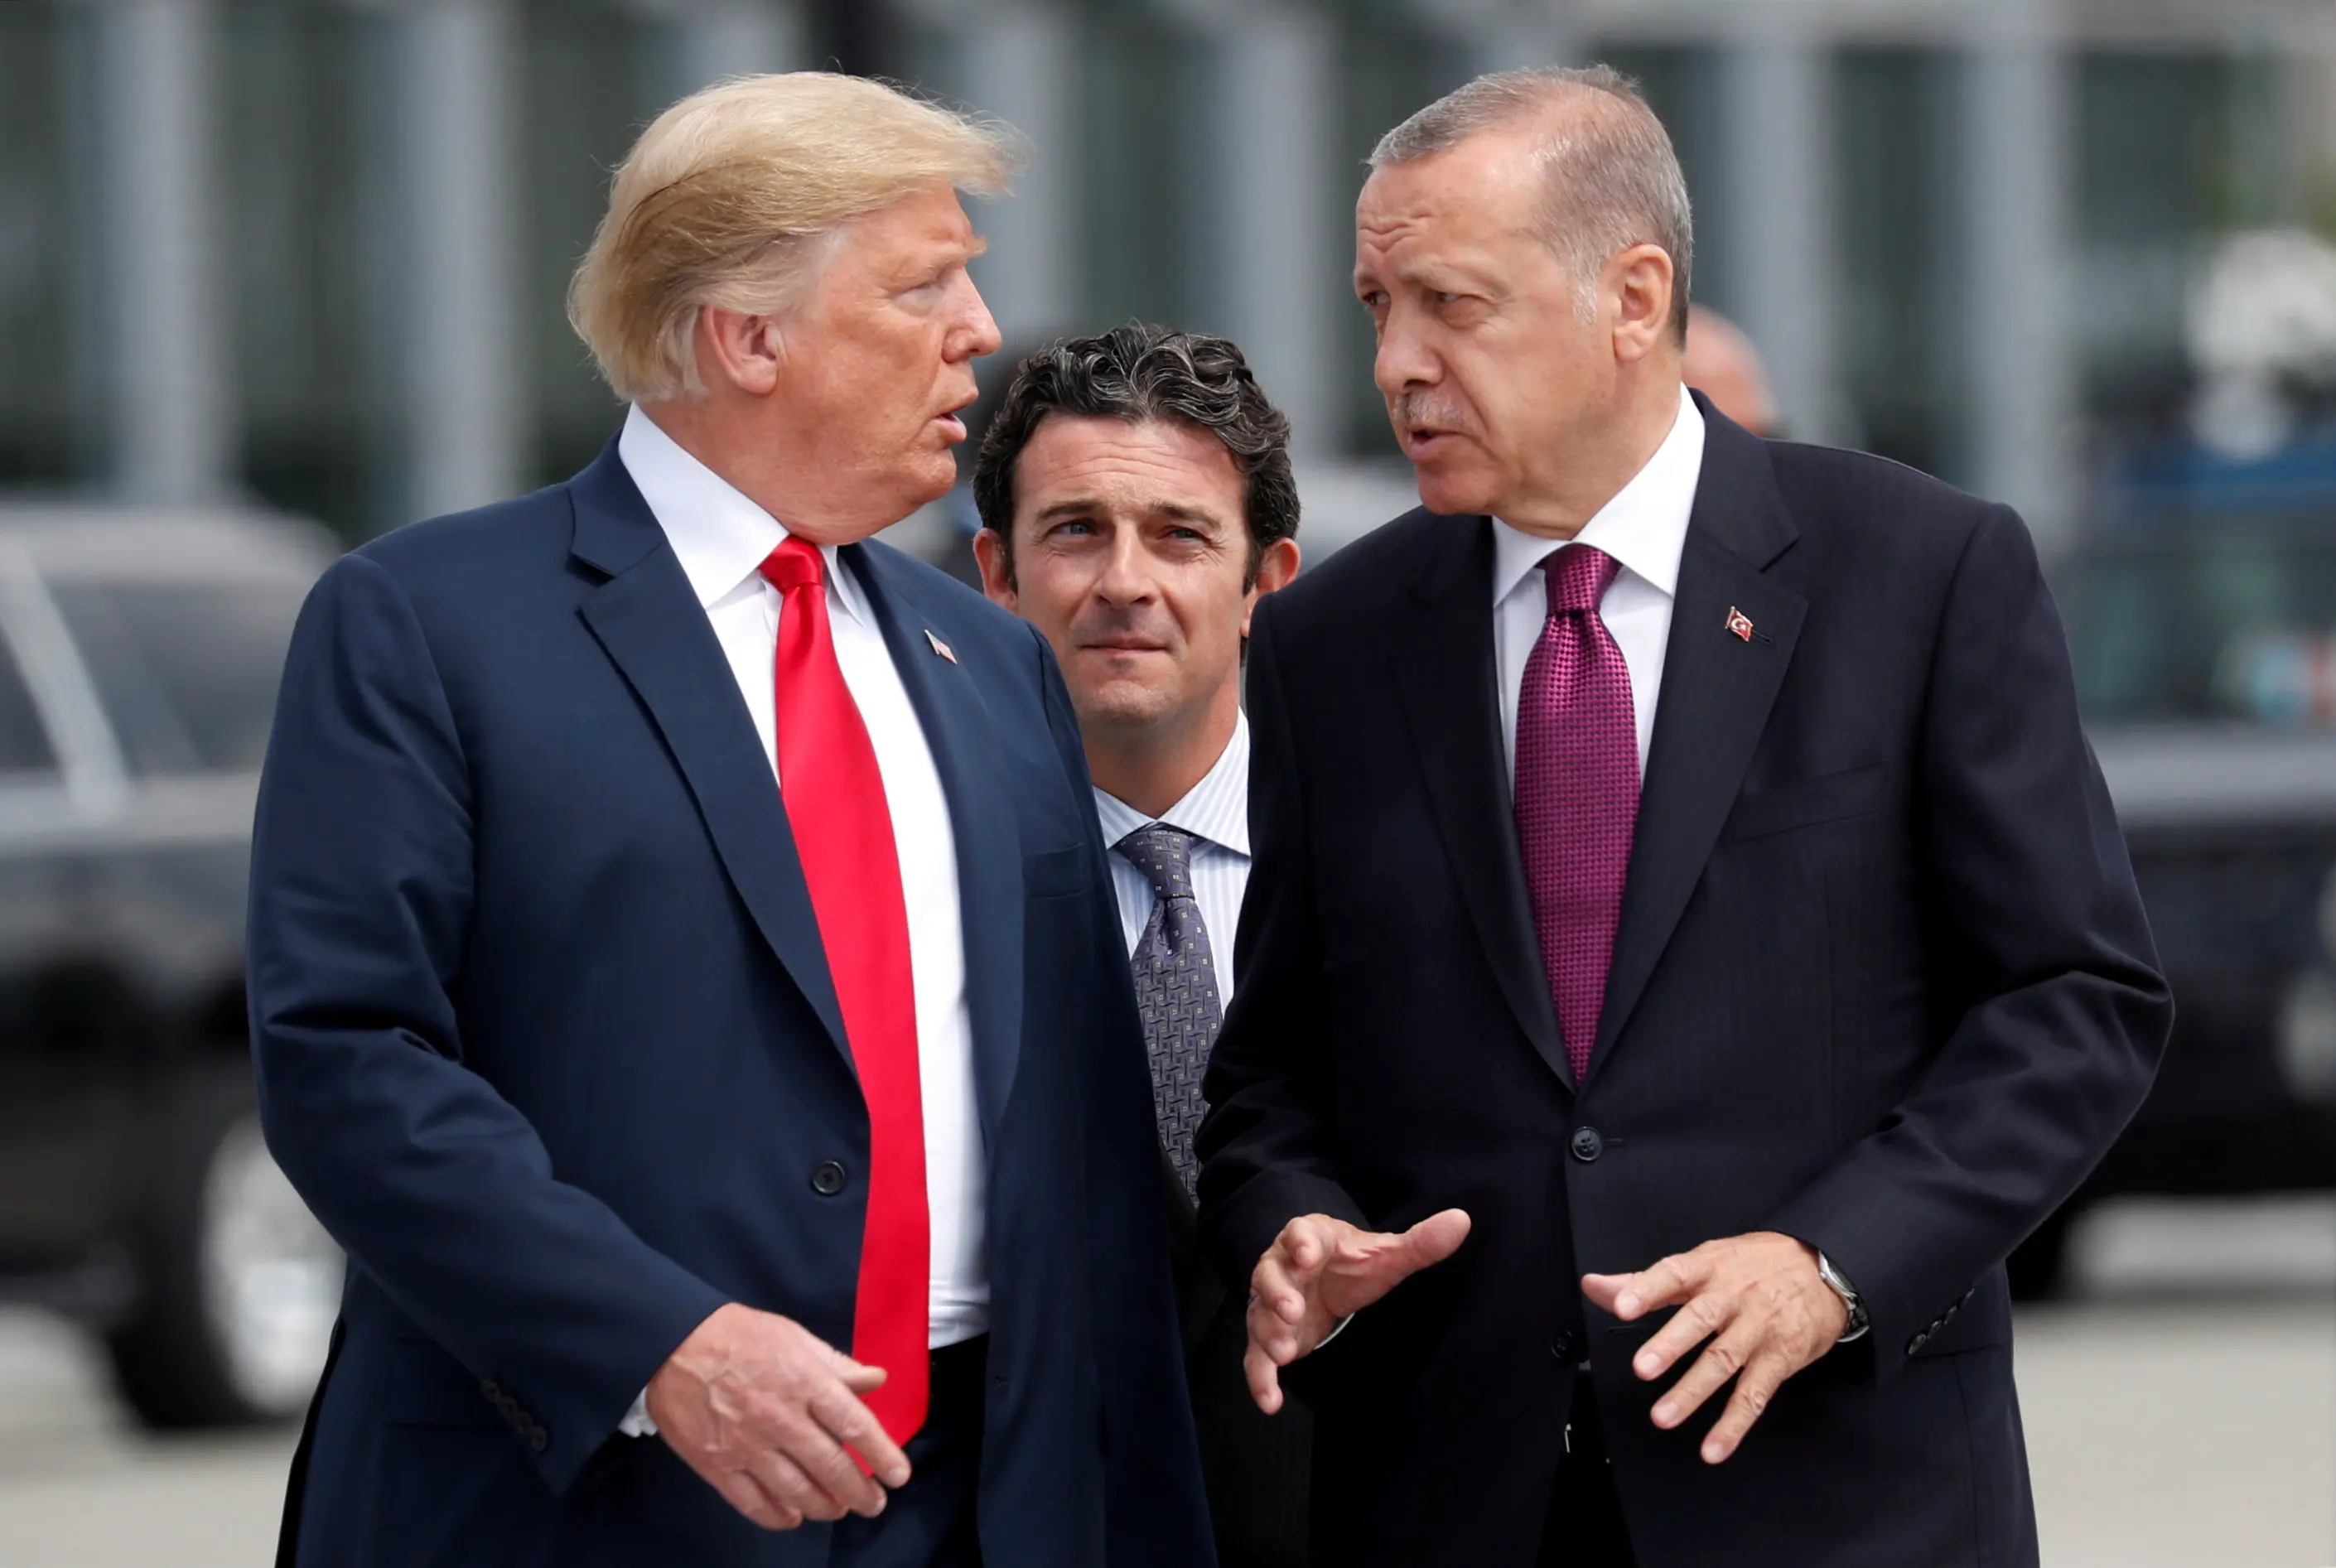 נשיא ארה"ב, דונלד טראמפ ונשיא טורקיה, ארדואן, במהלך פסגת נאט"ו בבריסל